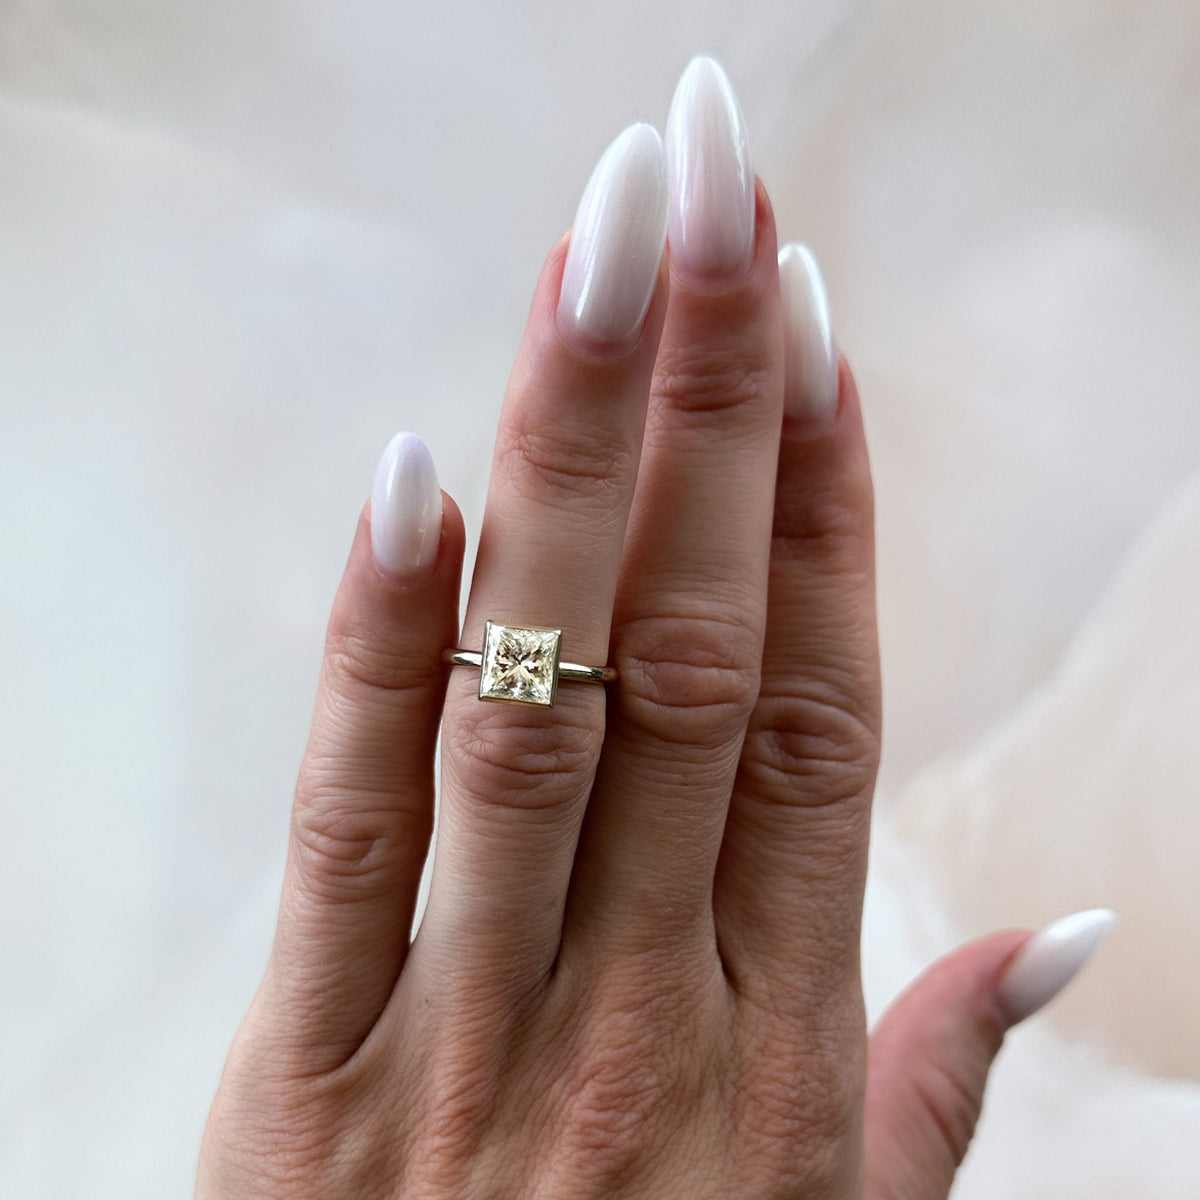 Penumbra Bezel Set Engagement Ring With Princess Cut